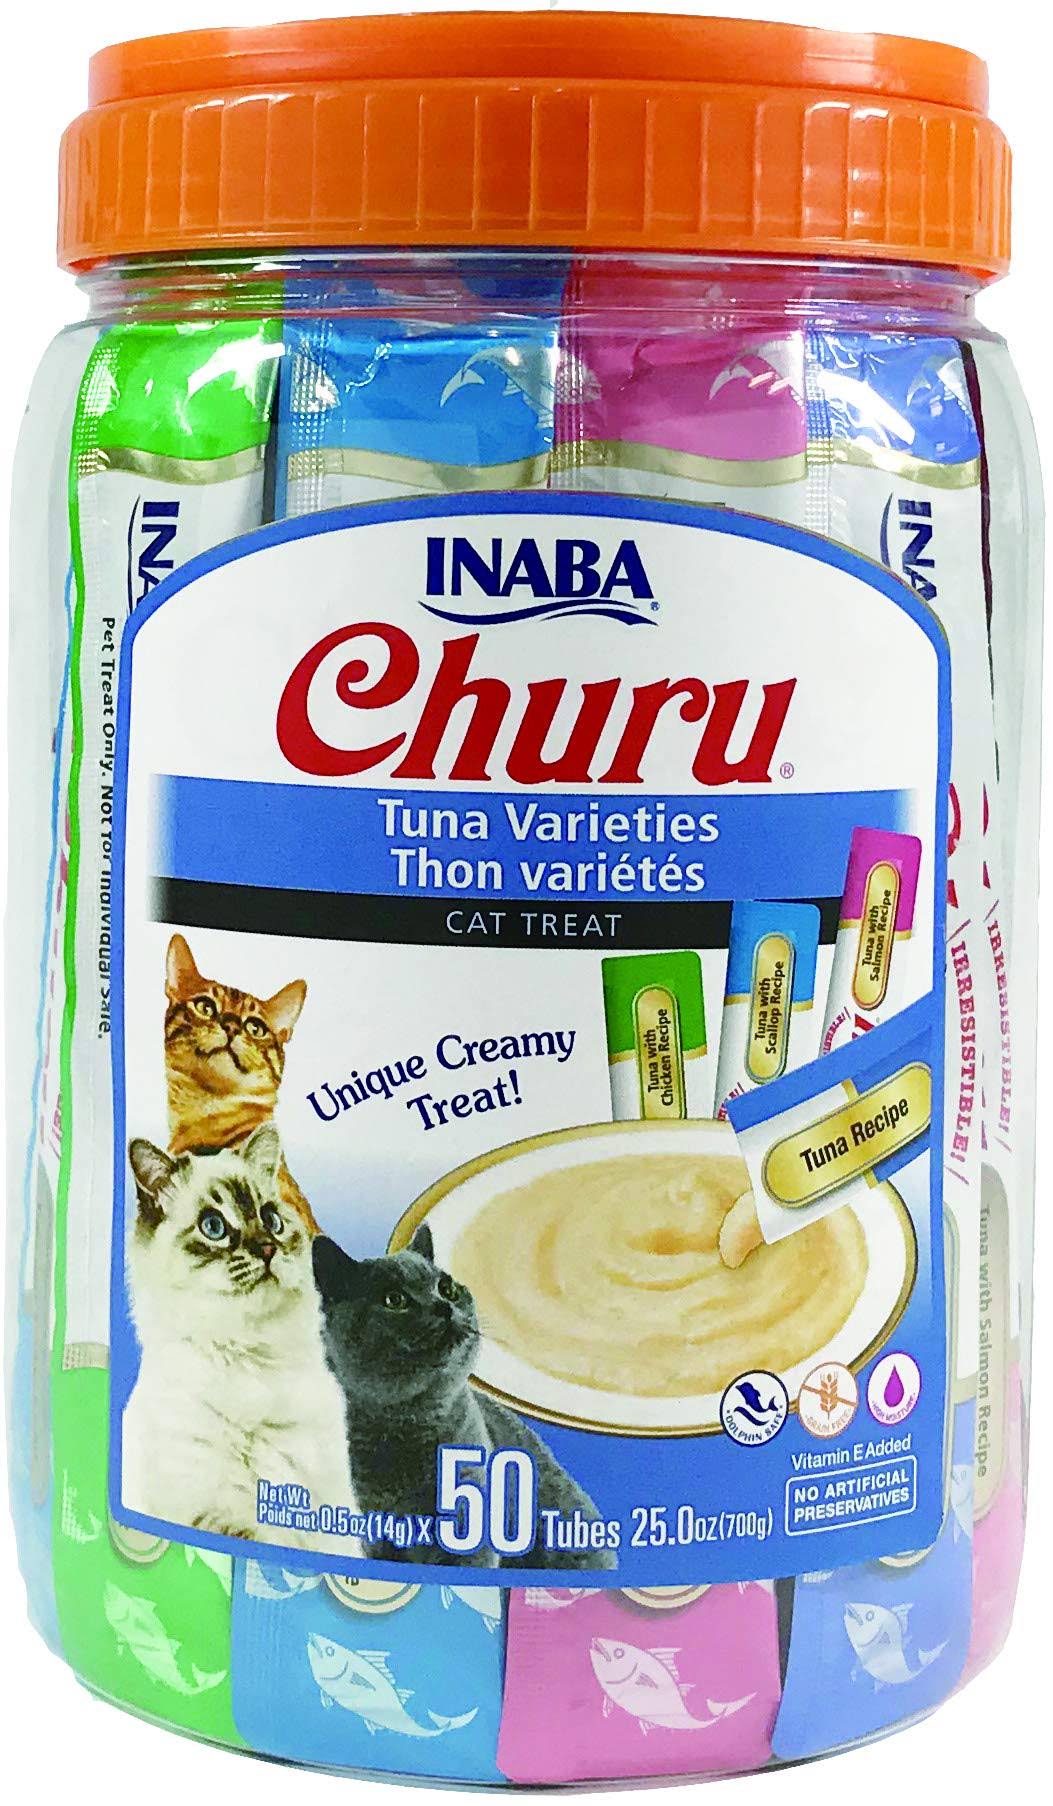 Inaba 50 ct Churu Tuna Variety Pack